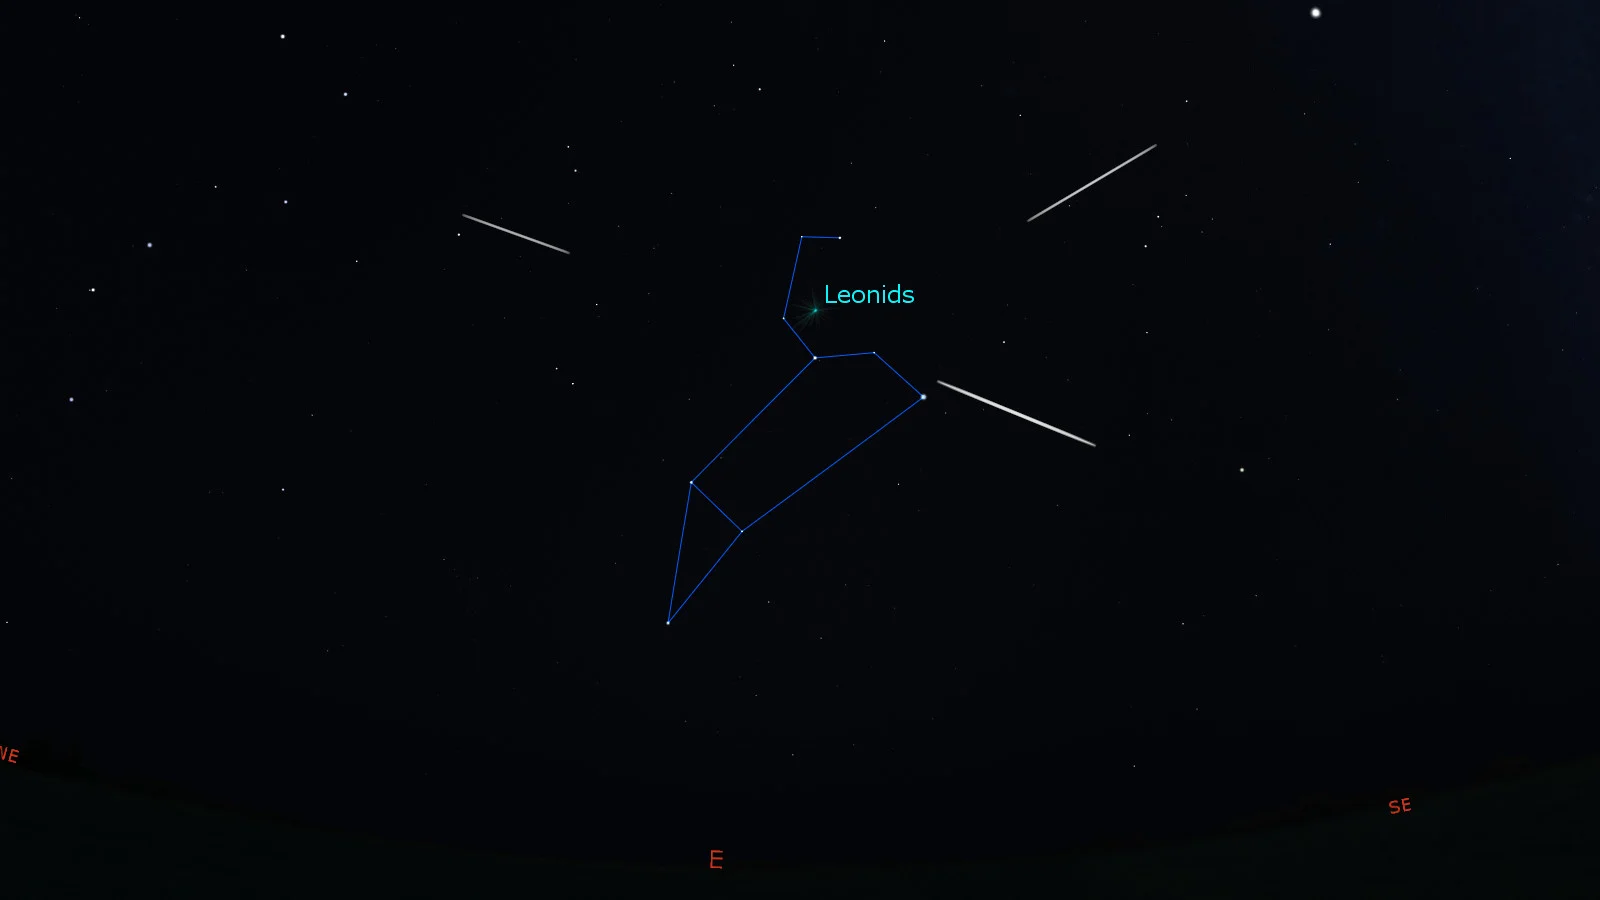 11-17 - Leonids meteor shower